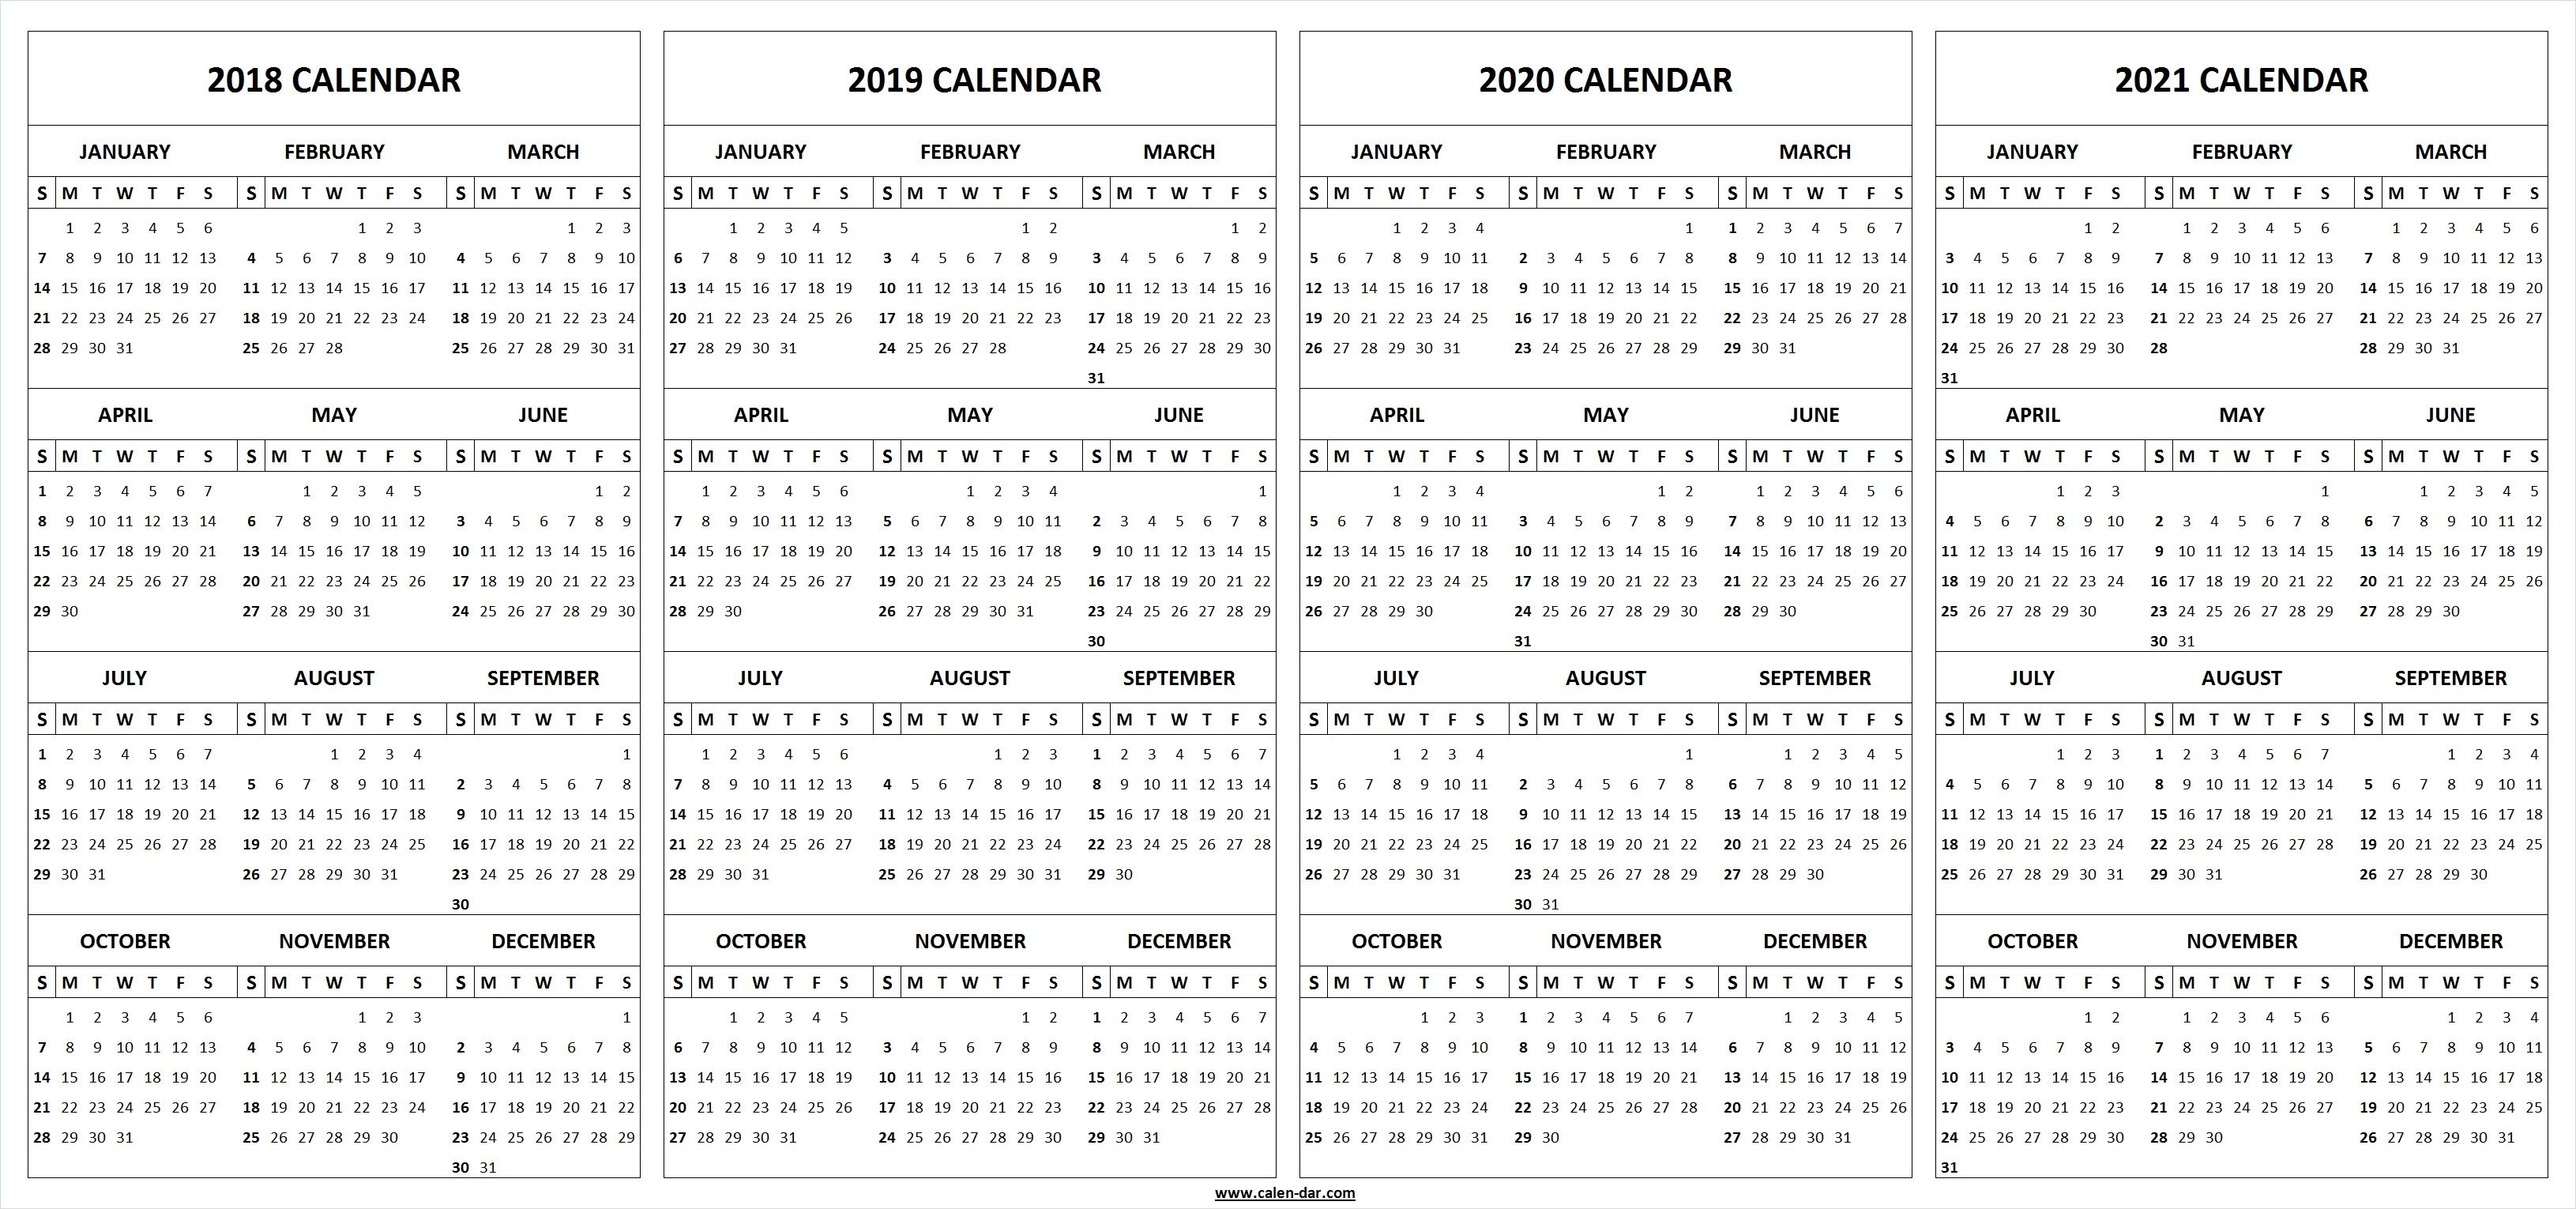 4 Four Year 2018 2019 2020 2021 Calendar Printable Template 2020 And 2021 Calendar Printable